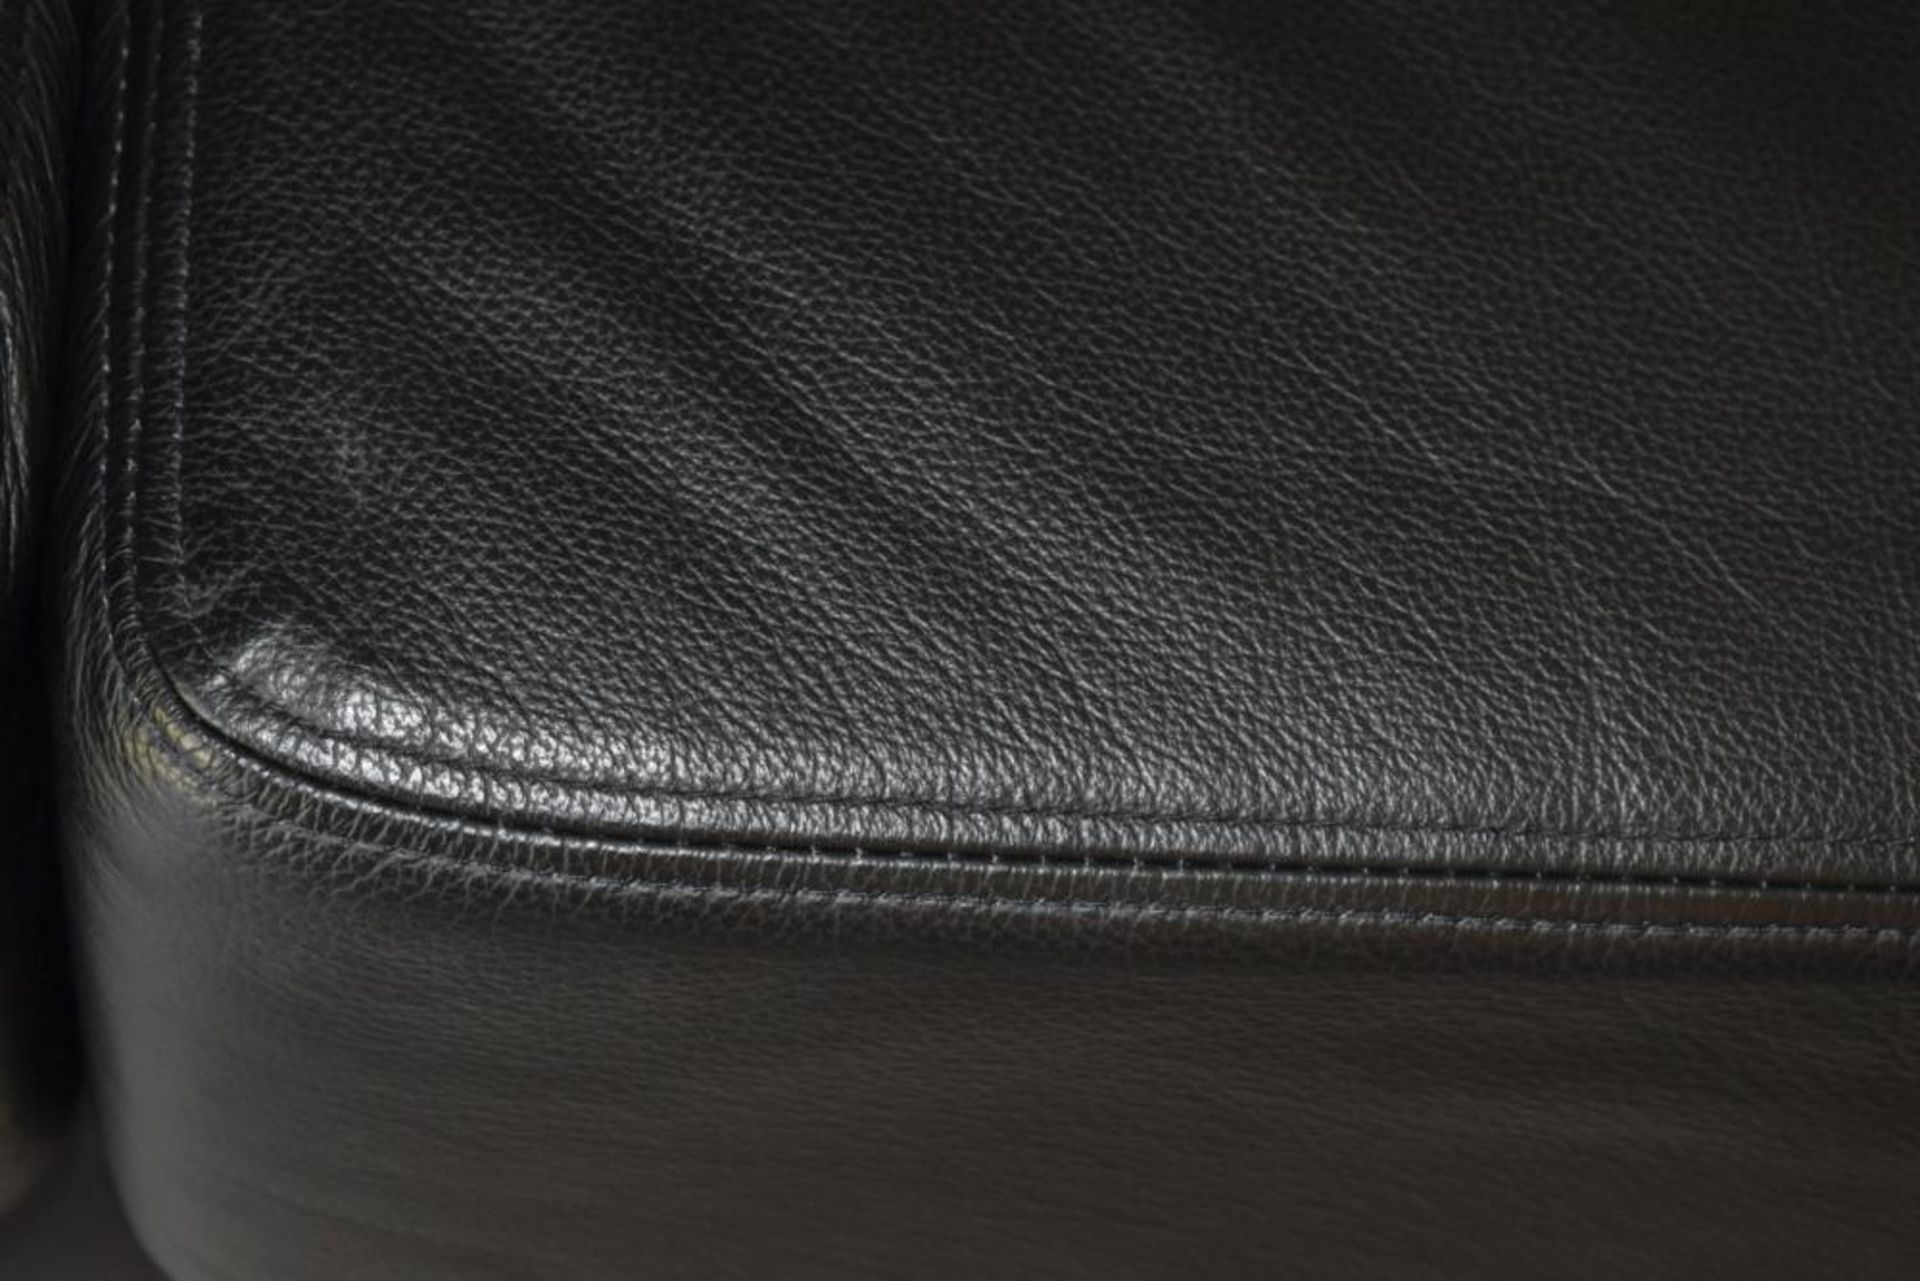 1 x Saxon Bespoke Corner Sofa Upholstered in Genuine Black Leather - Three-Piece Contemporary Design - Image 4 of 14